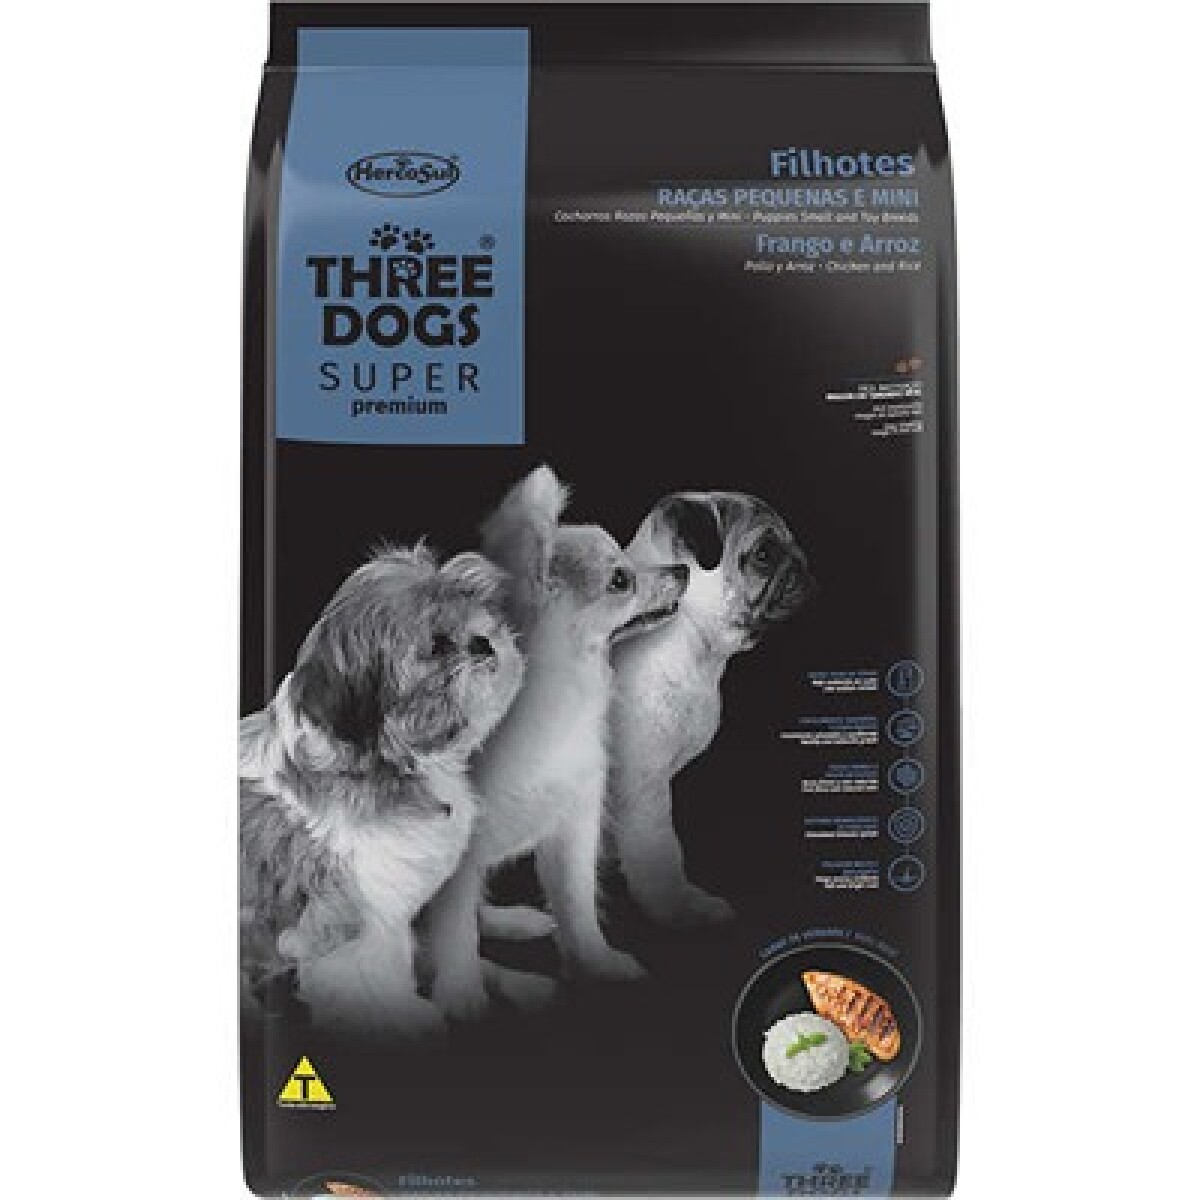 THREE DOGS SUPER PREMIUM FILHOTE PEQ 10,1 KG - Unica 